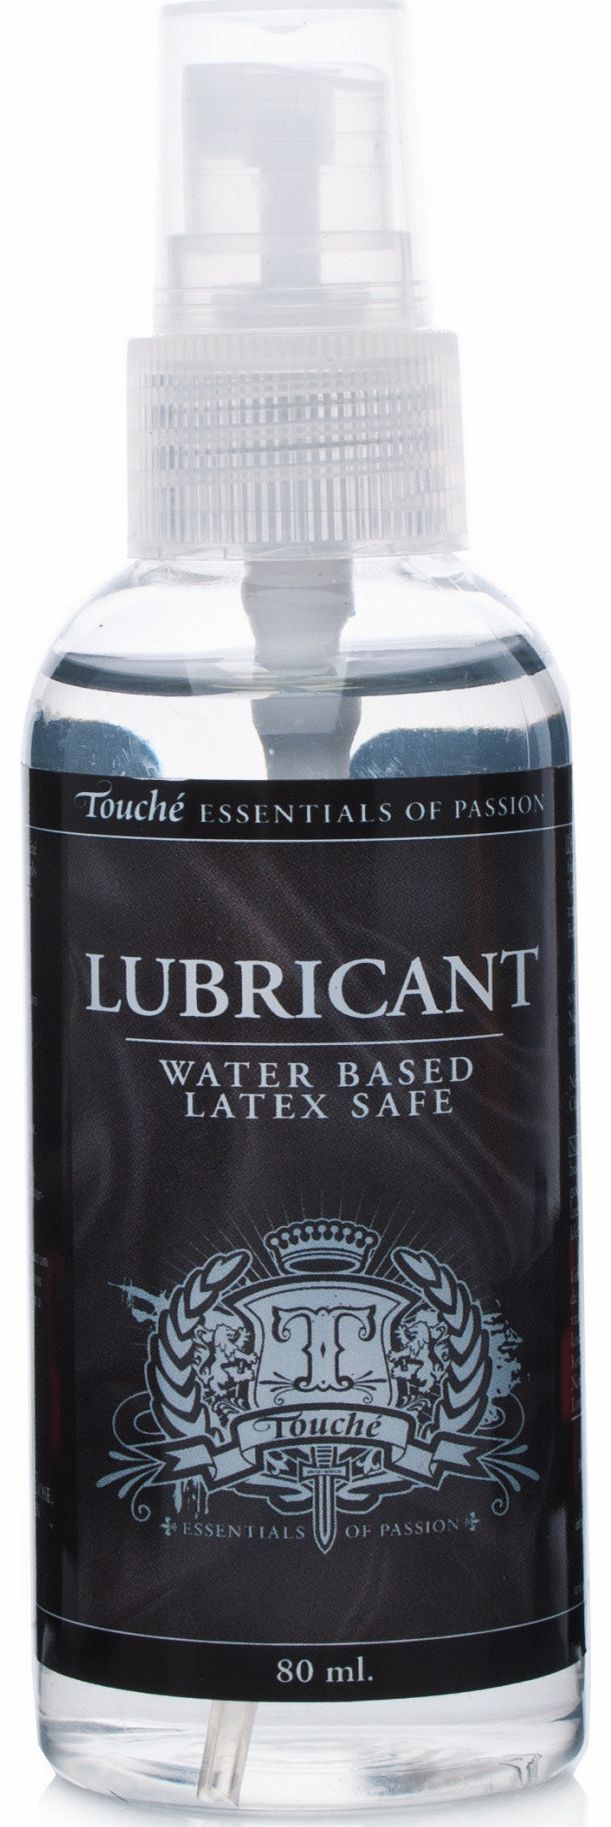 Unbranded Lubricant Waterbased 80ml